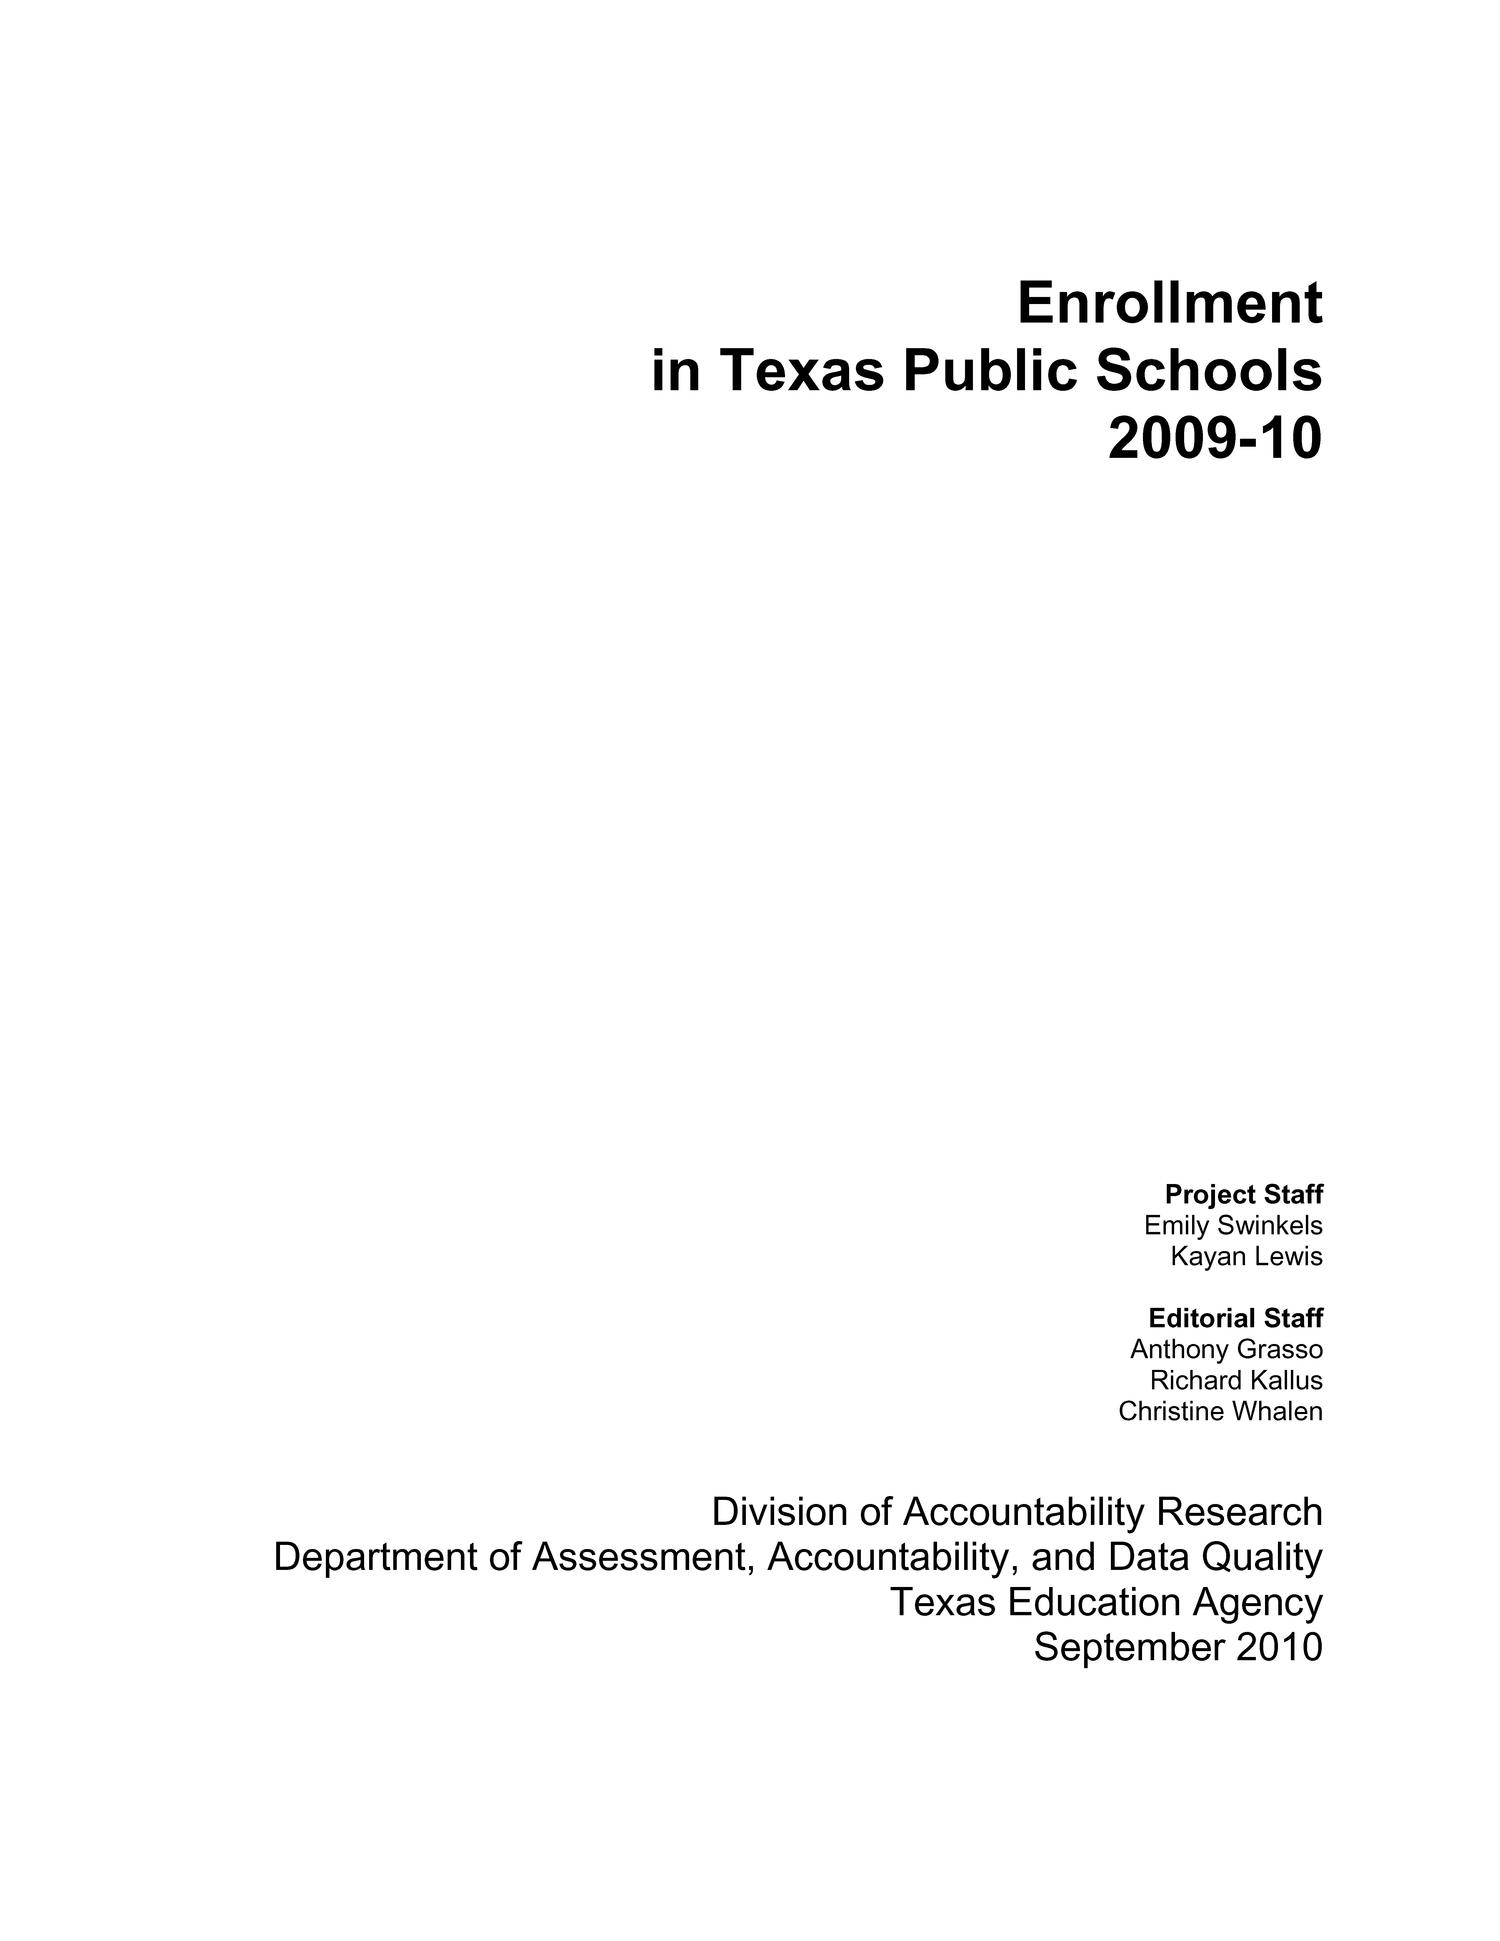 Enrollment in Texas Public Schools: 2009-2010
                                                
                                                    Title Page
                                                